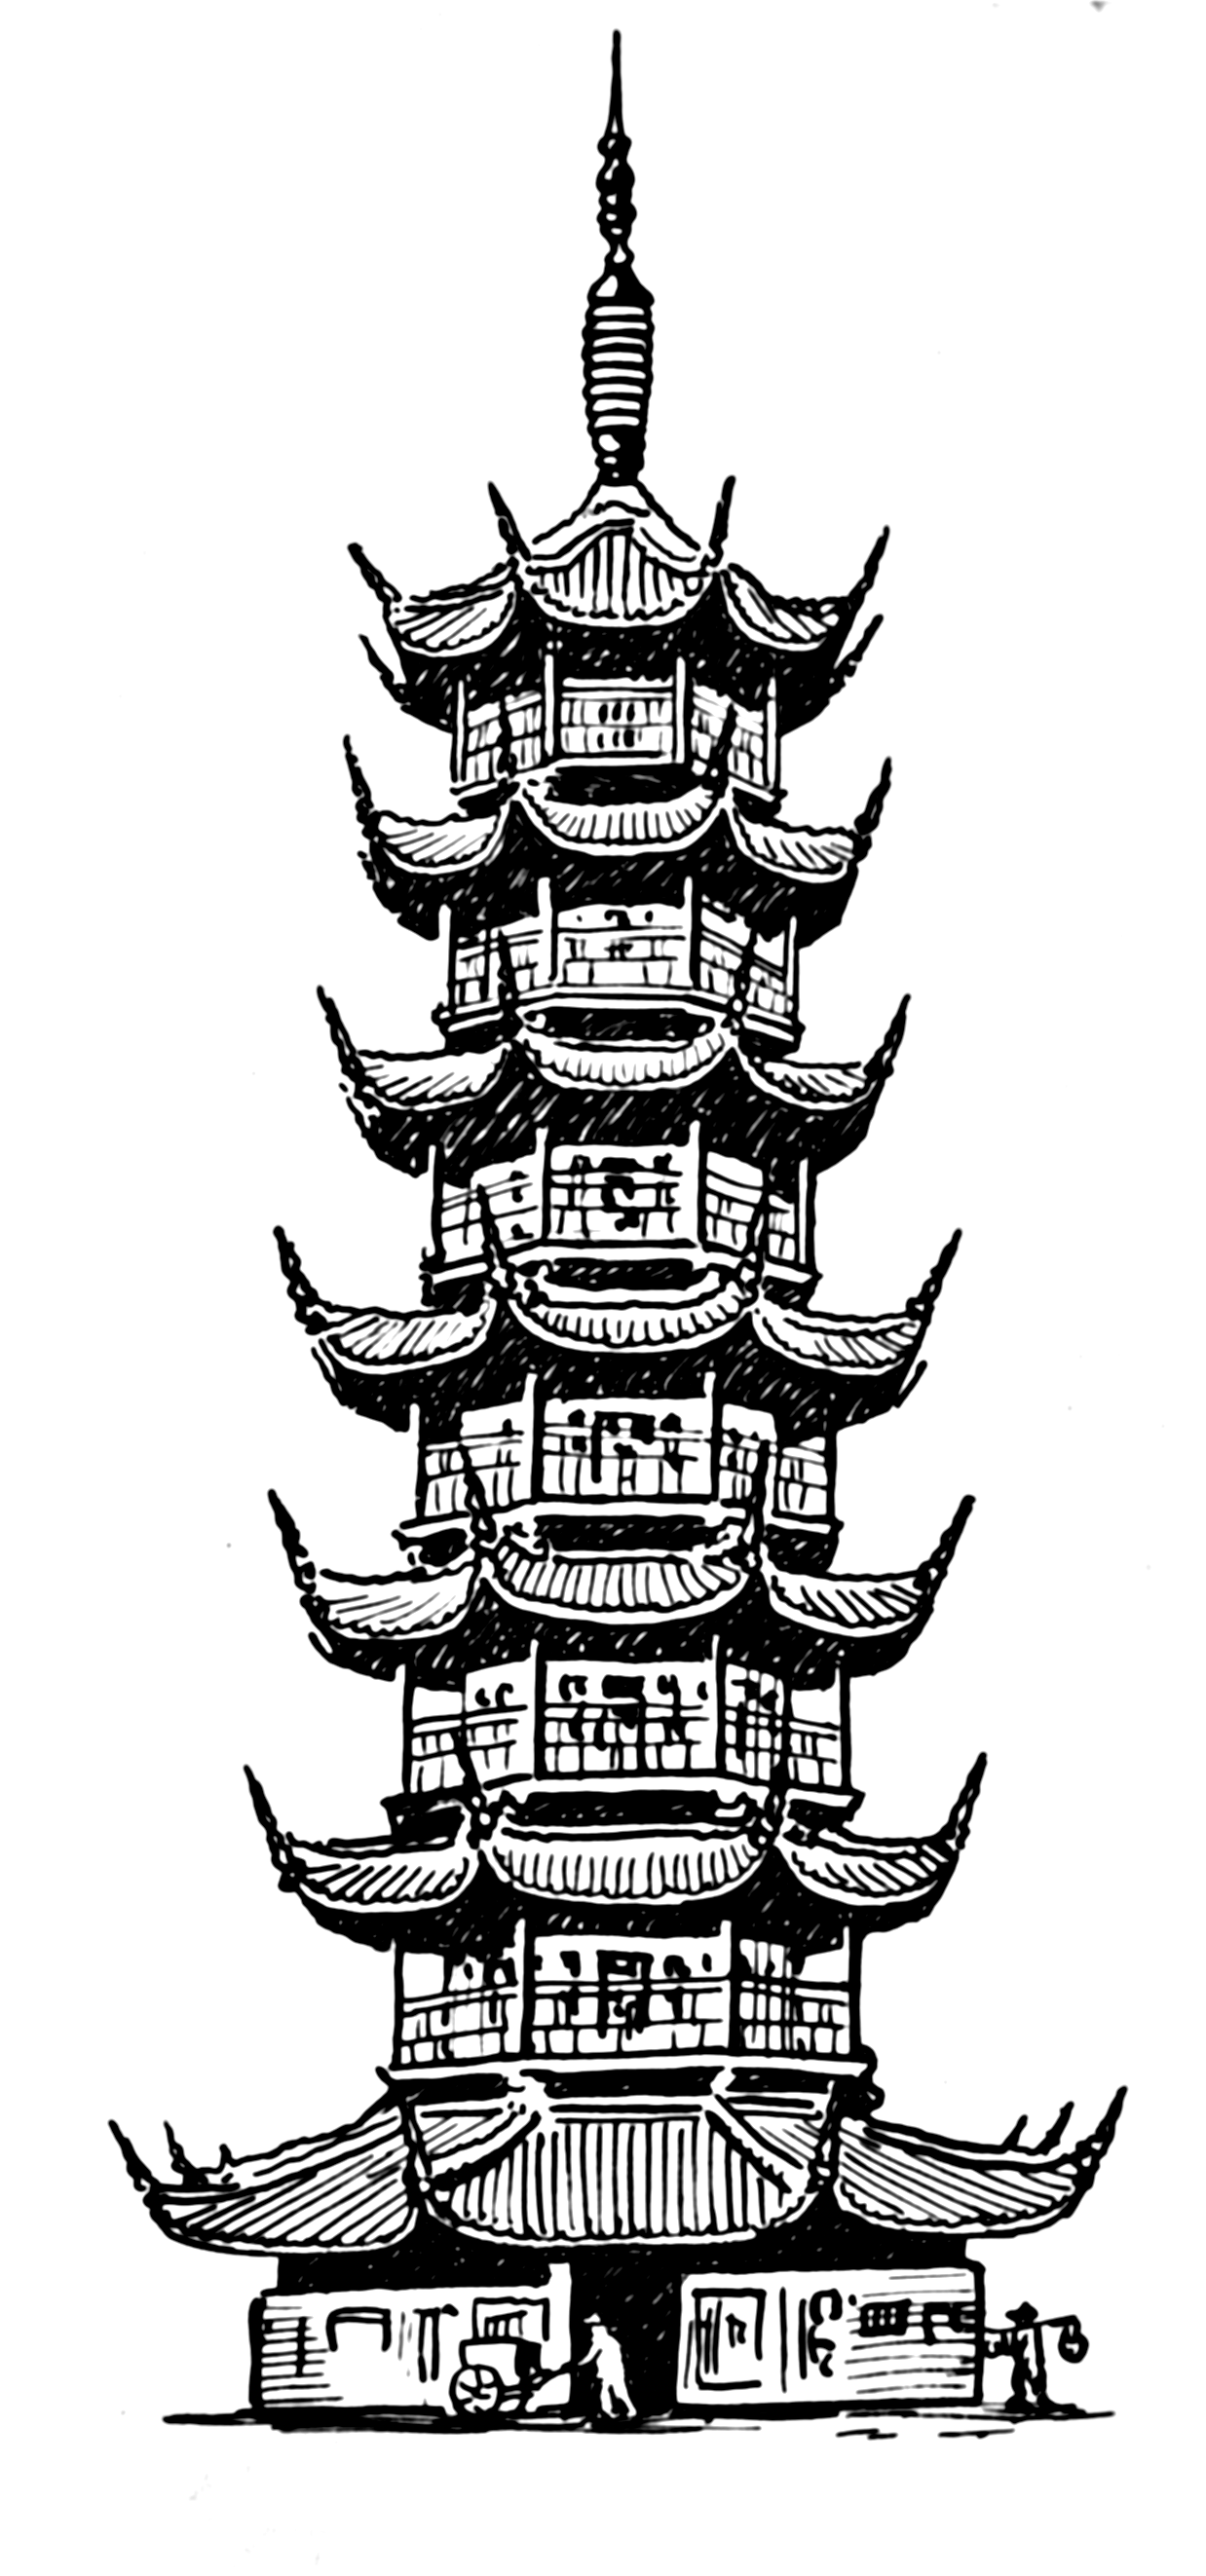 Filepagoda - Pagoda Drawing. 